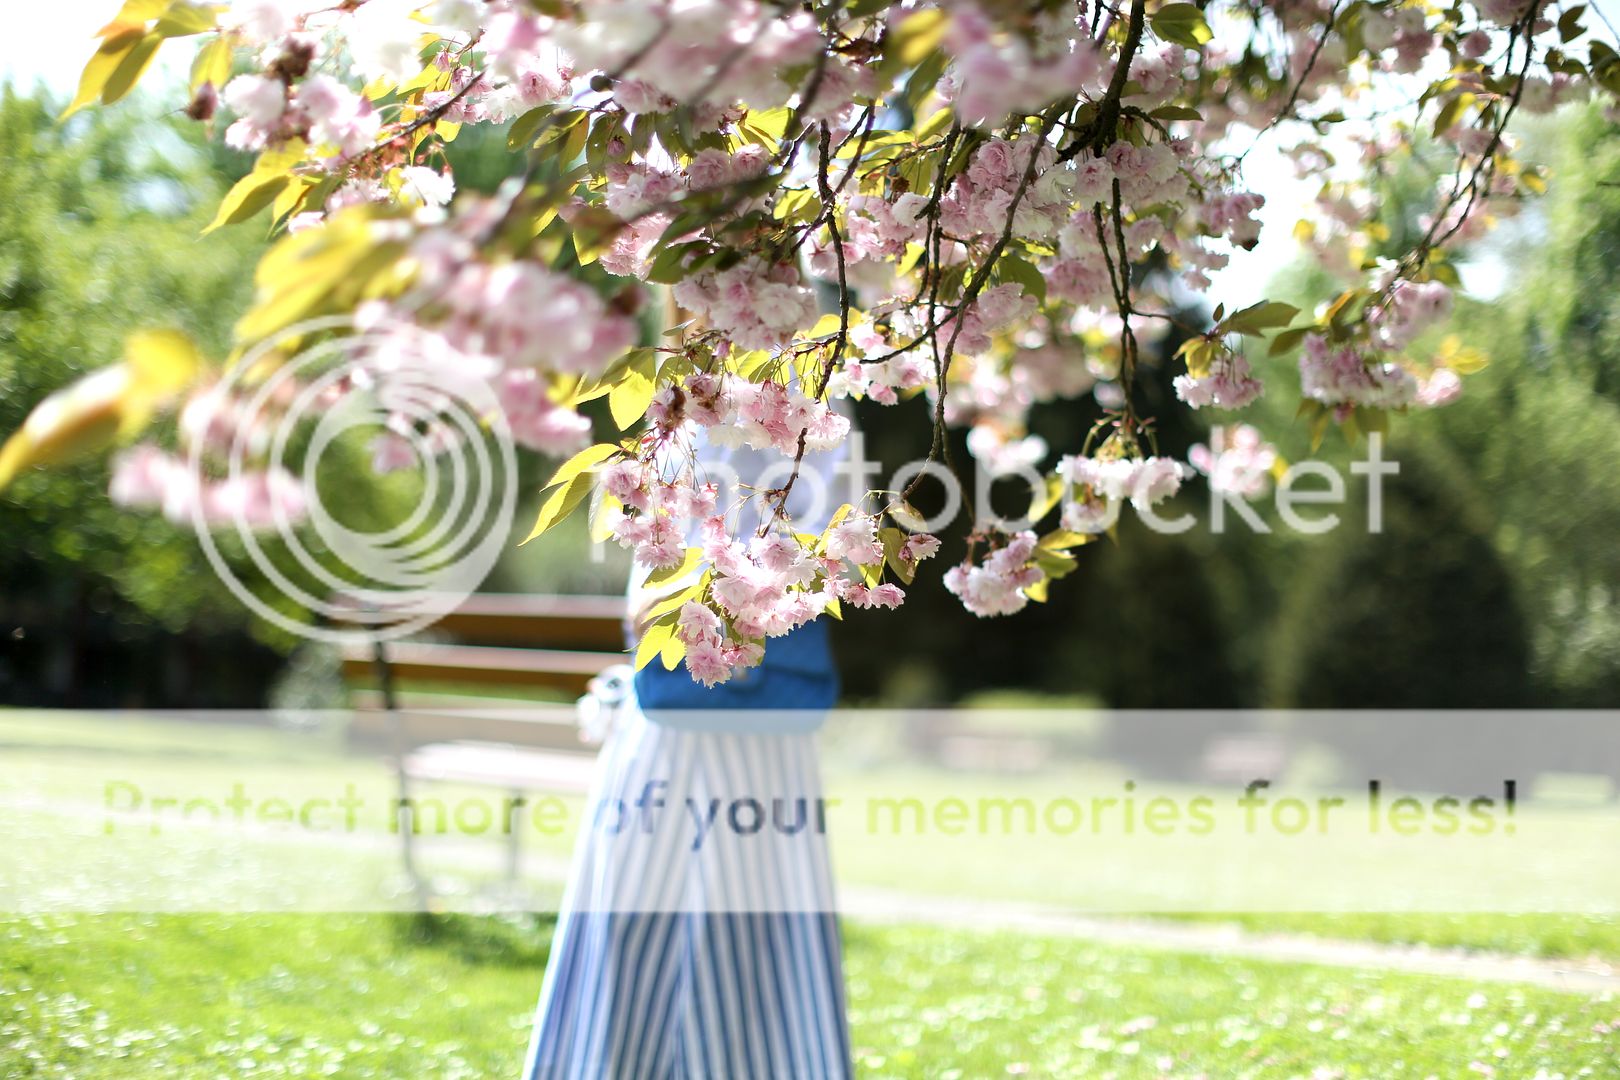  photo cherry blossoms 5_zps3qtiysr3.jpg